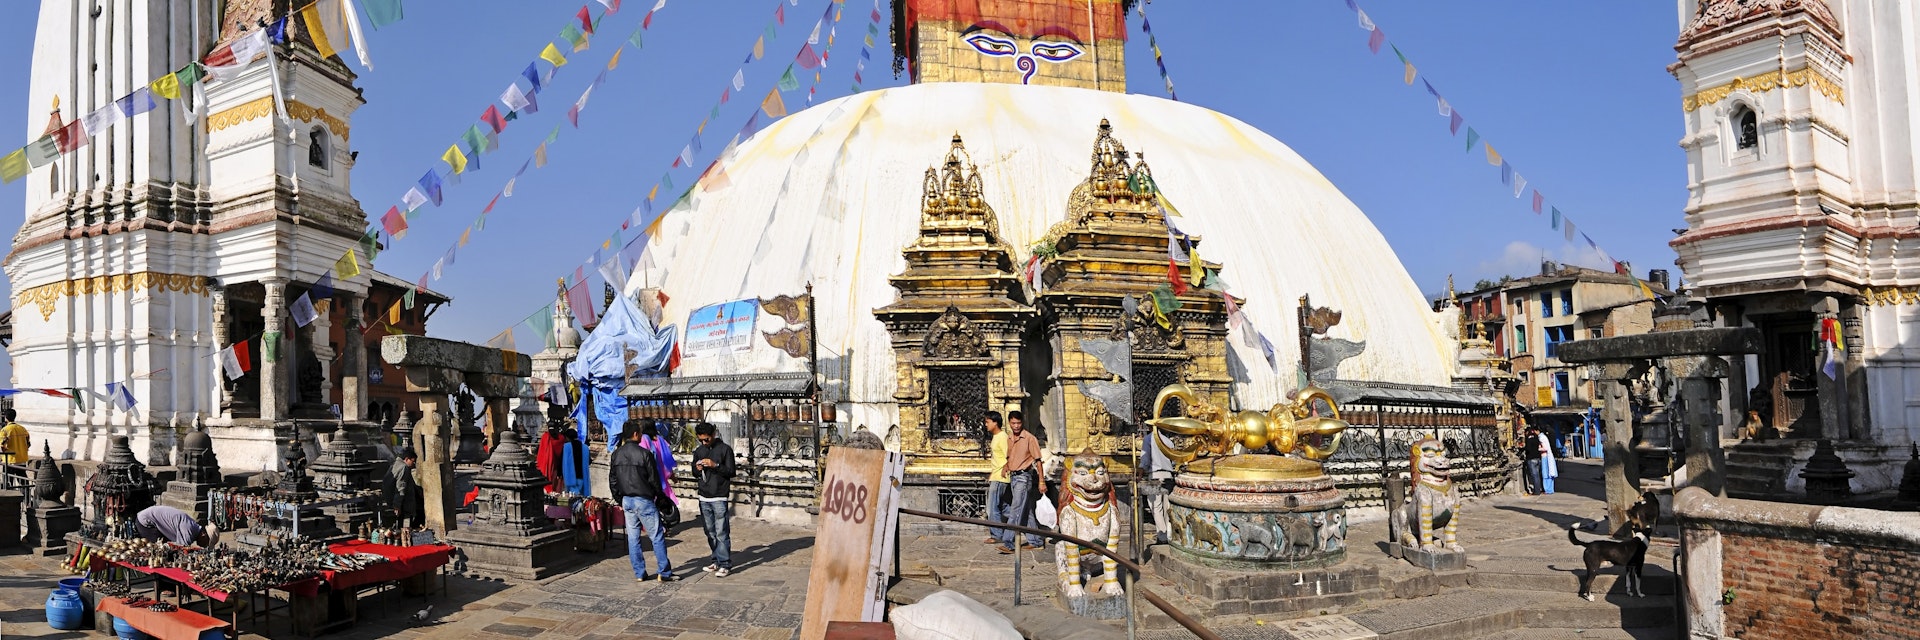 Swayambhunath stupa in Kathmandu